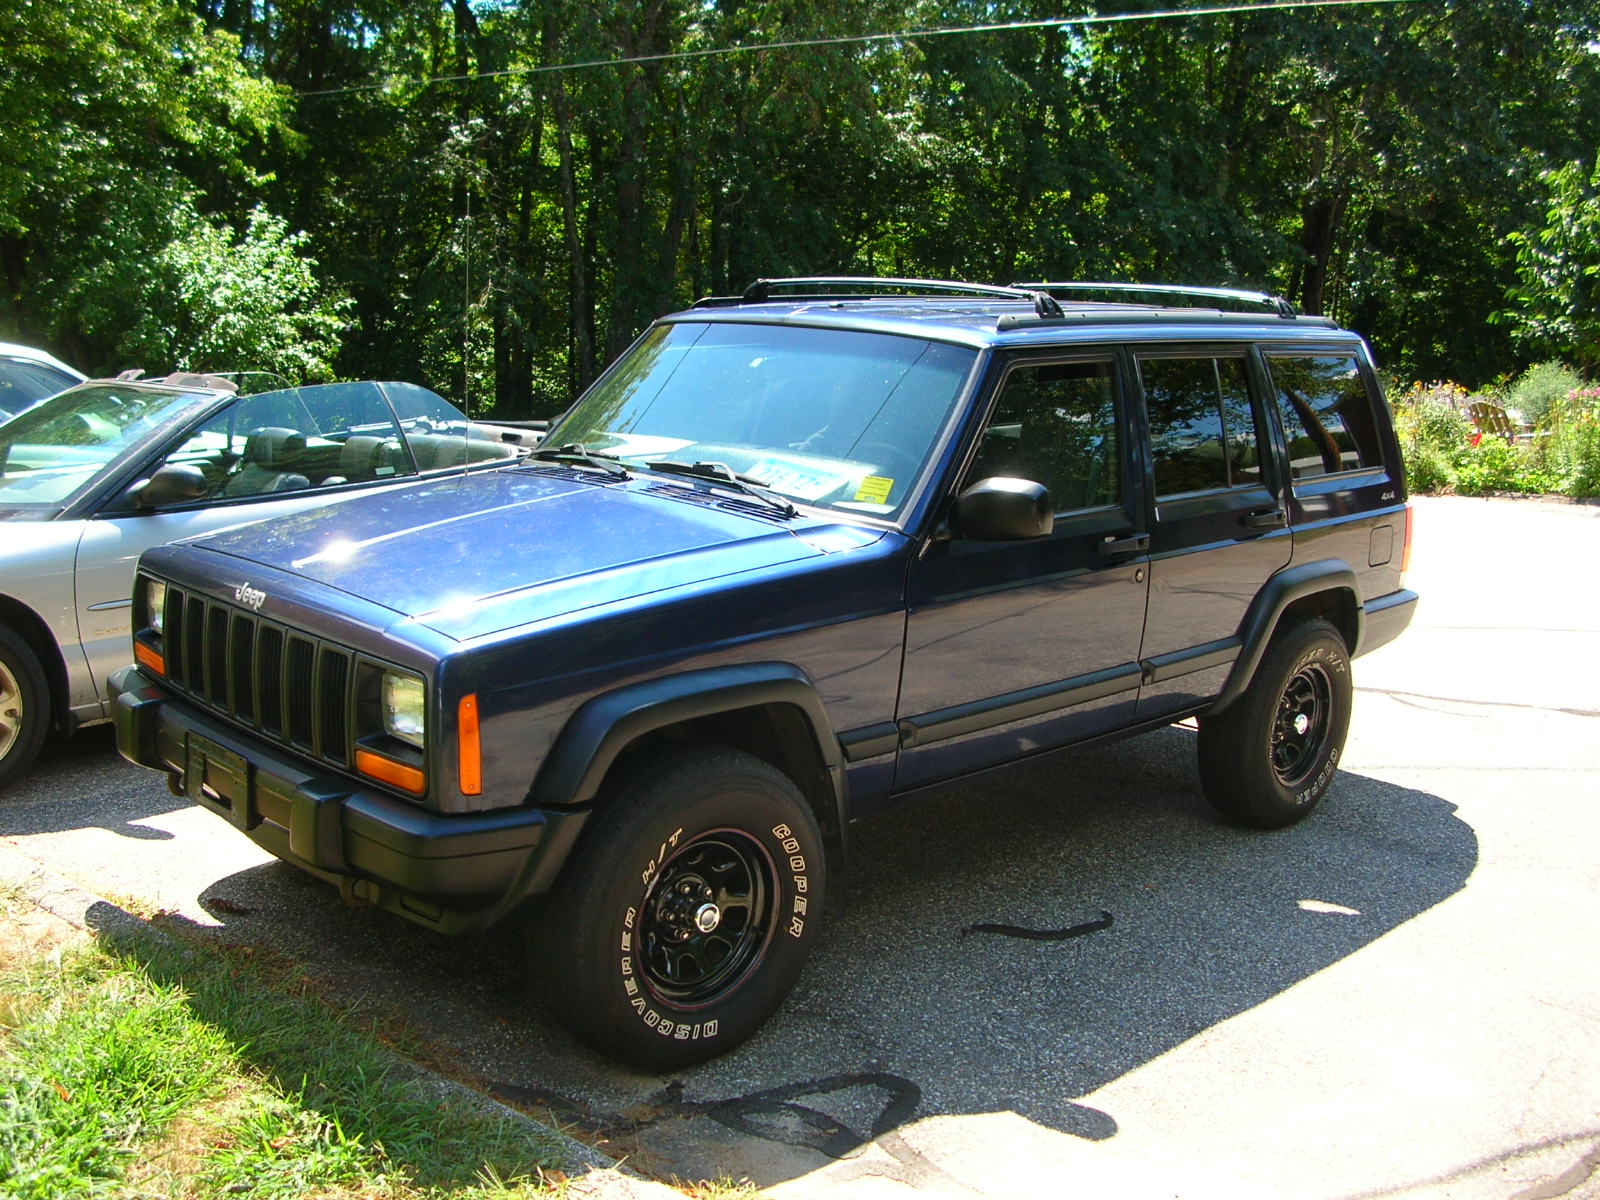 1999 Jeep cherokee classic value #2